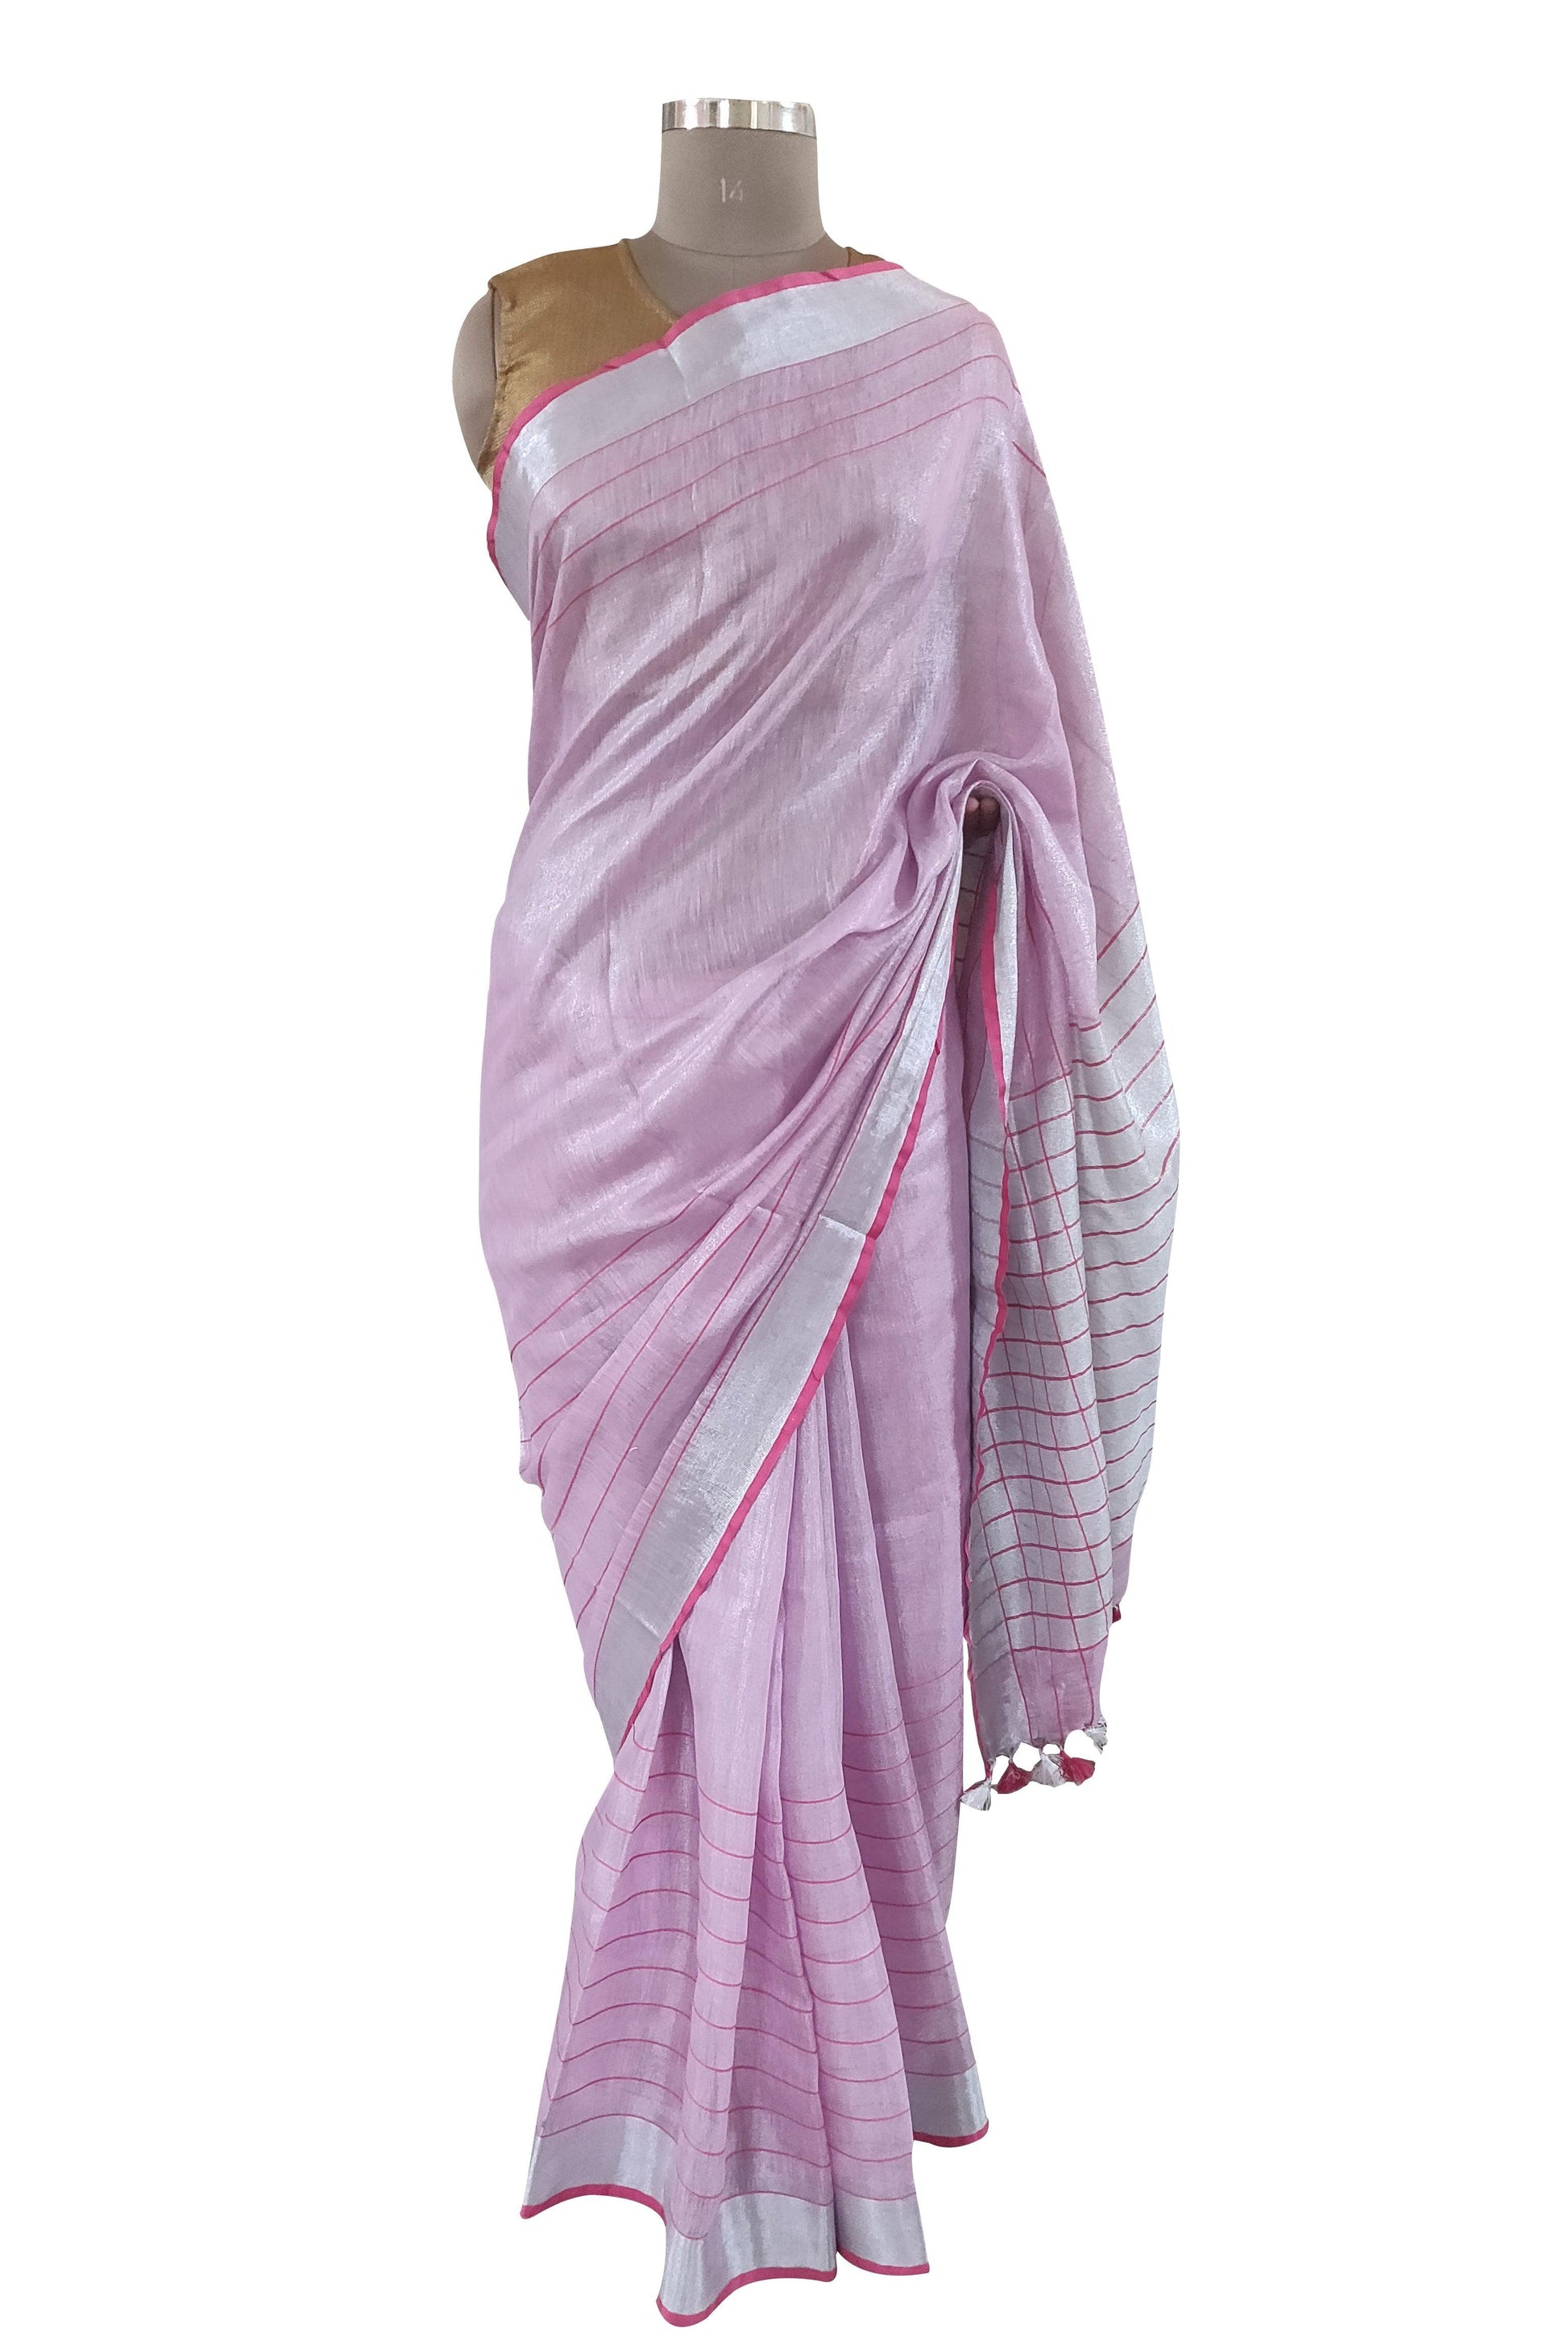 Silver Border pink Tissue Linen Cotton Saree BLS08-Anvi Creations-Handloom Saree